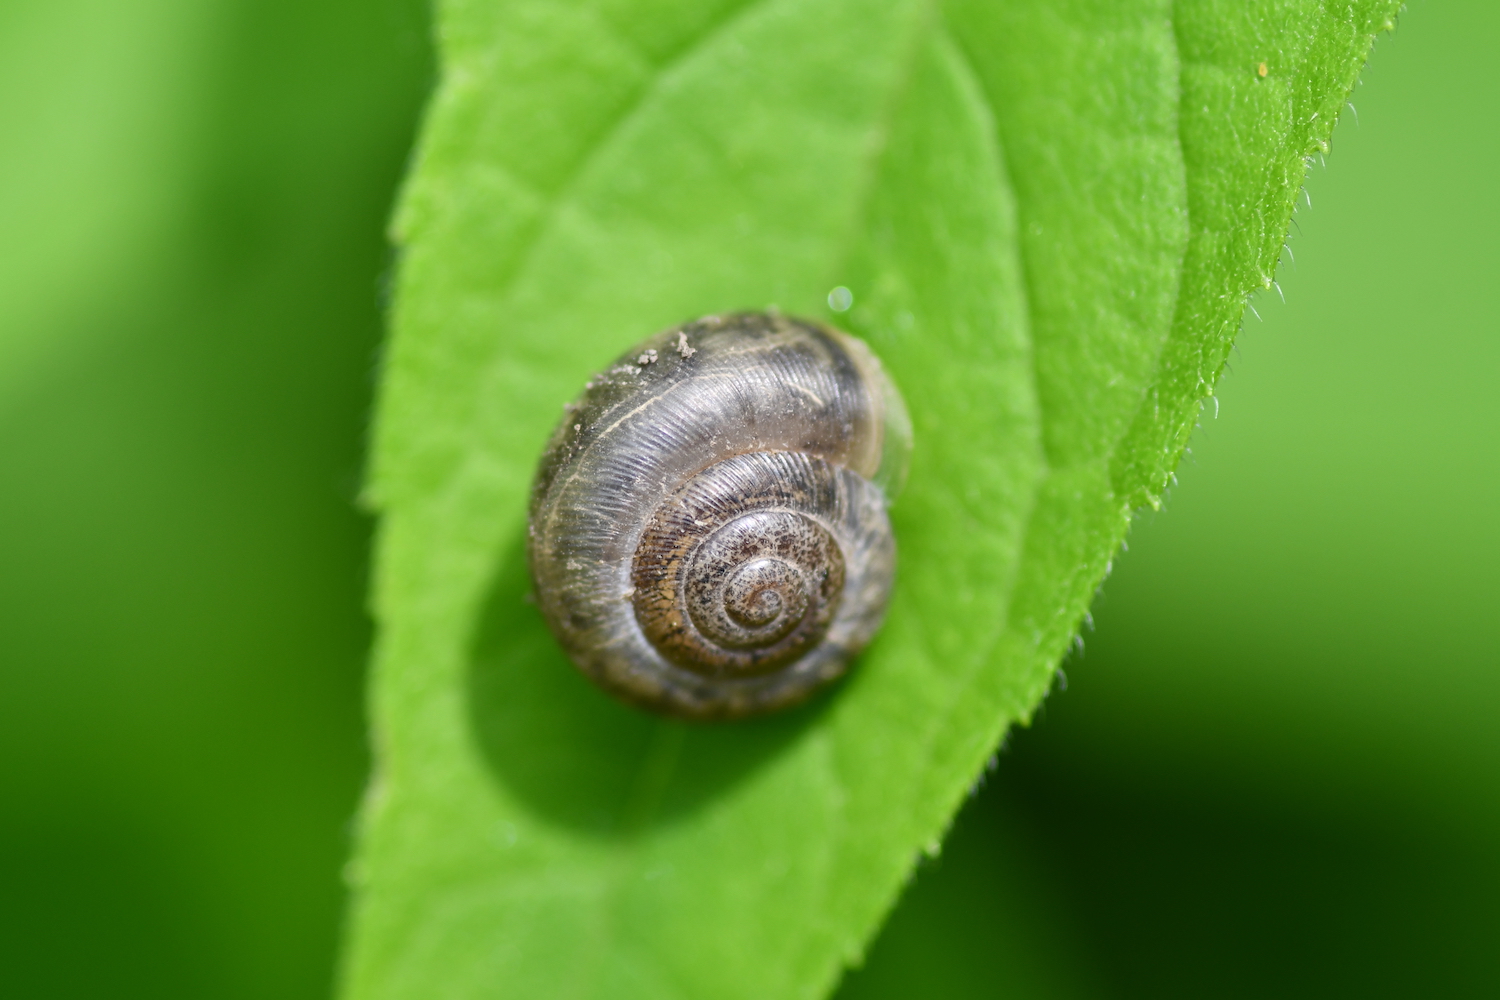 A snail on a leaf.